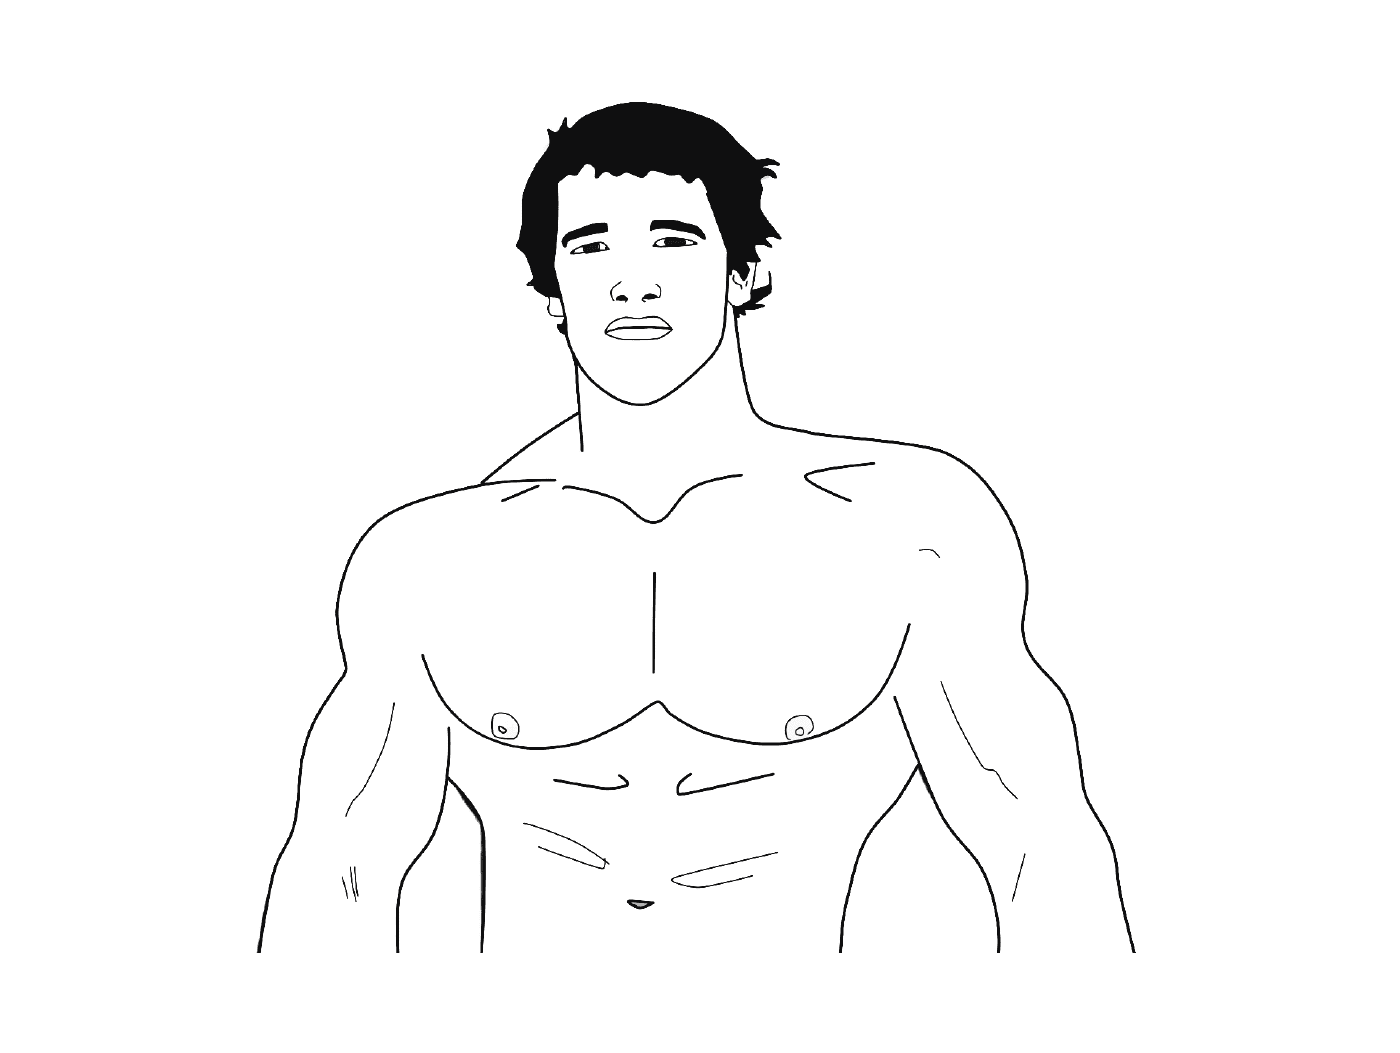  A man without a shirt 